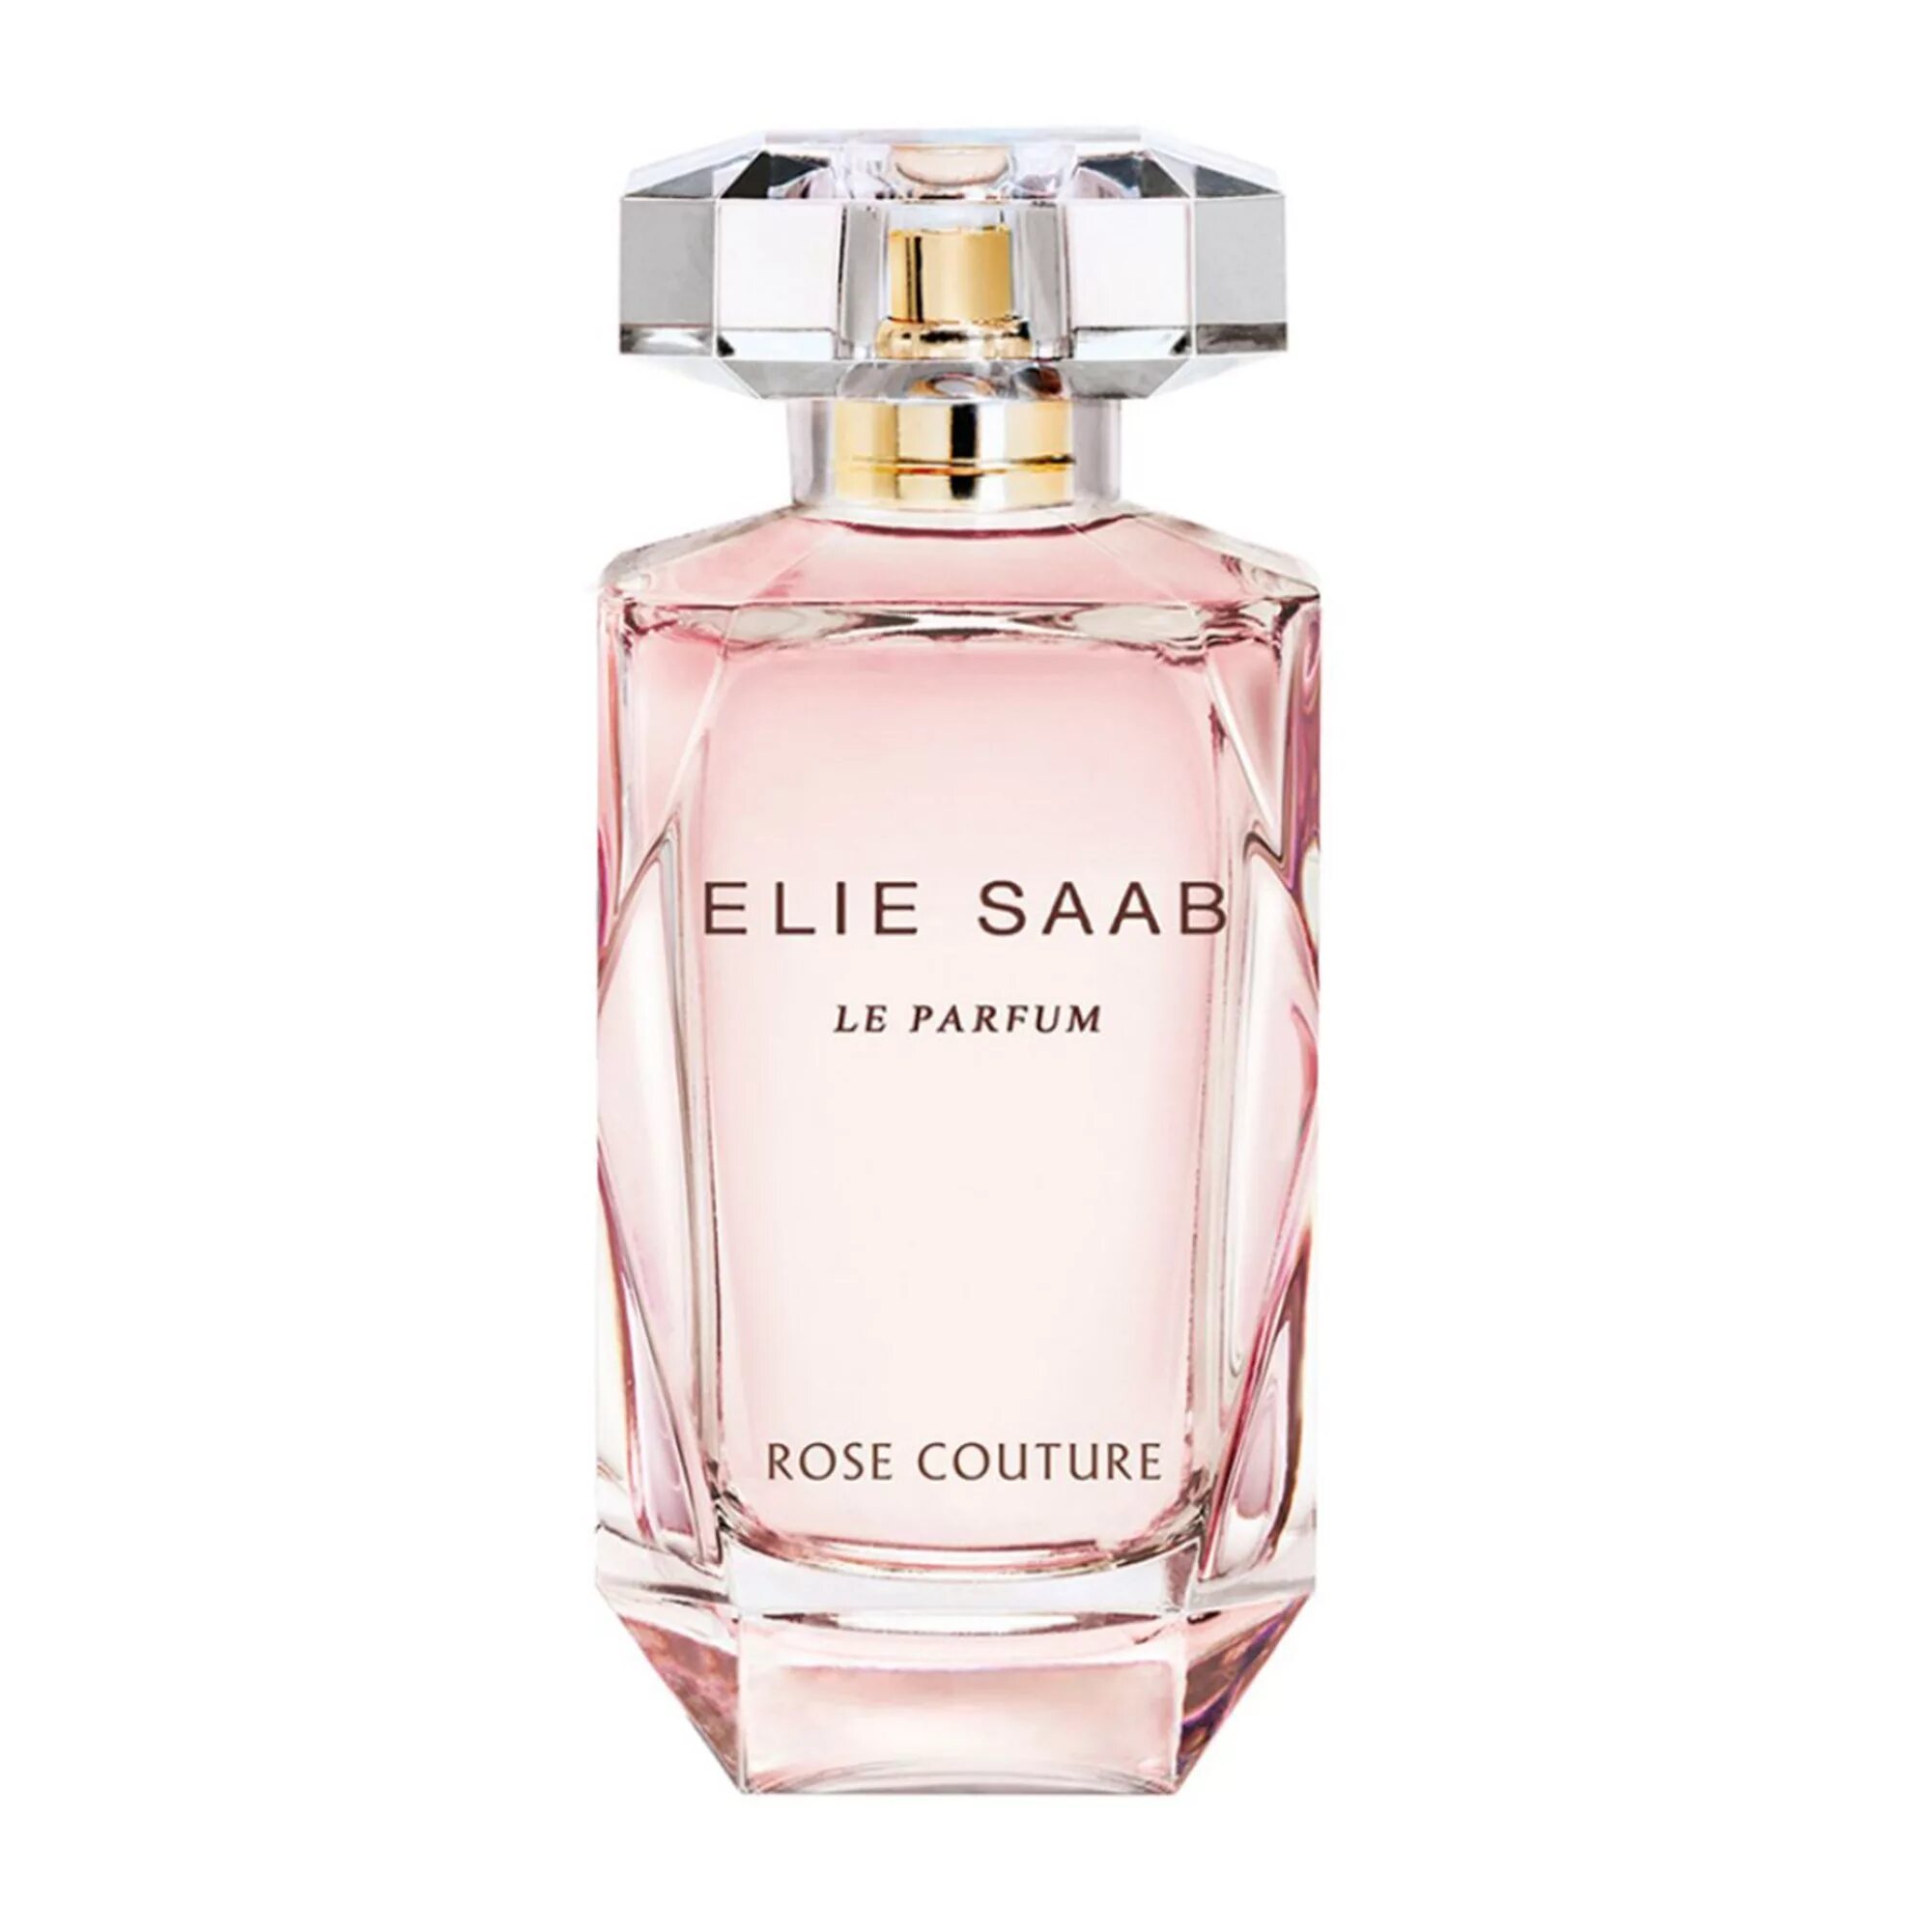 Elie Saab le Parfum 90 мл. Elie Saab le Parfum Rose Couture EDT (90 мл). Туалетная вода Эли Сааб женская. Elie Saab "Elie Saab le Parfum" тестер. Легкие нежные духи